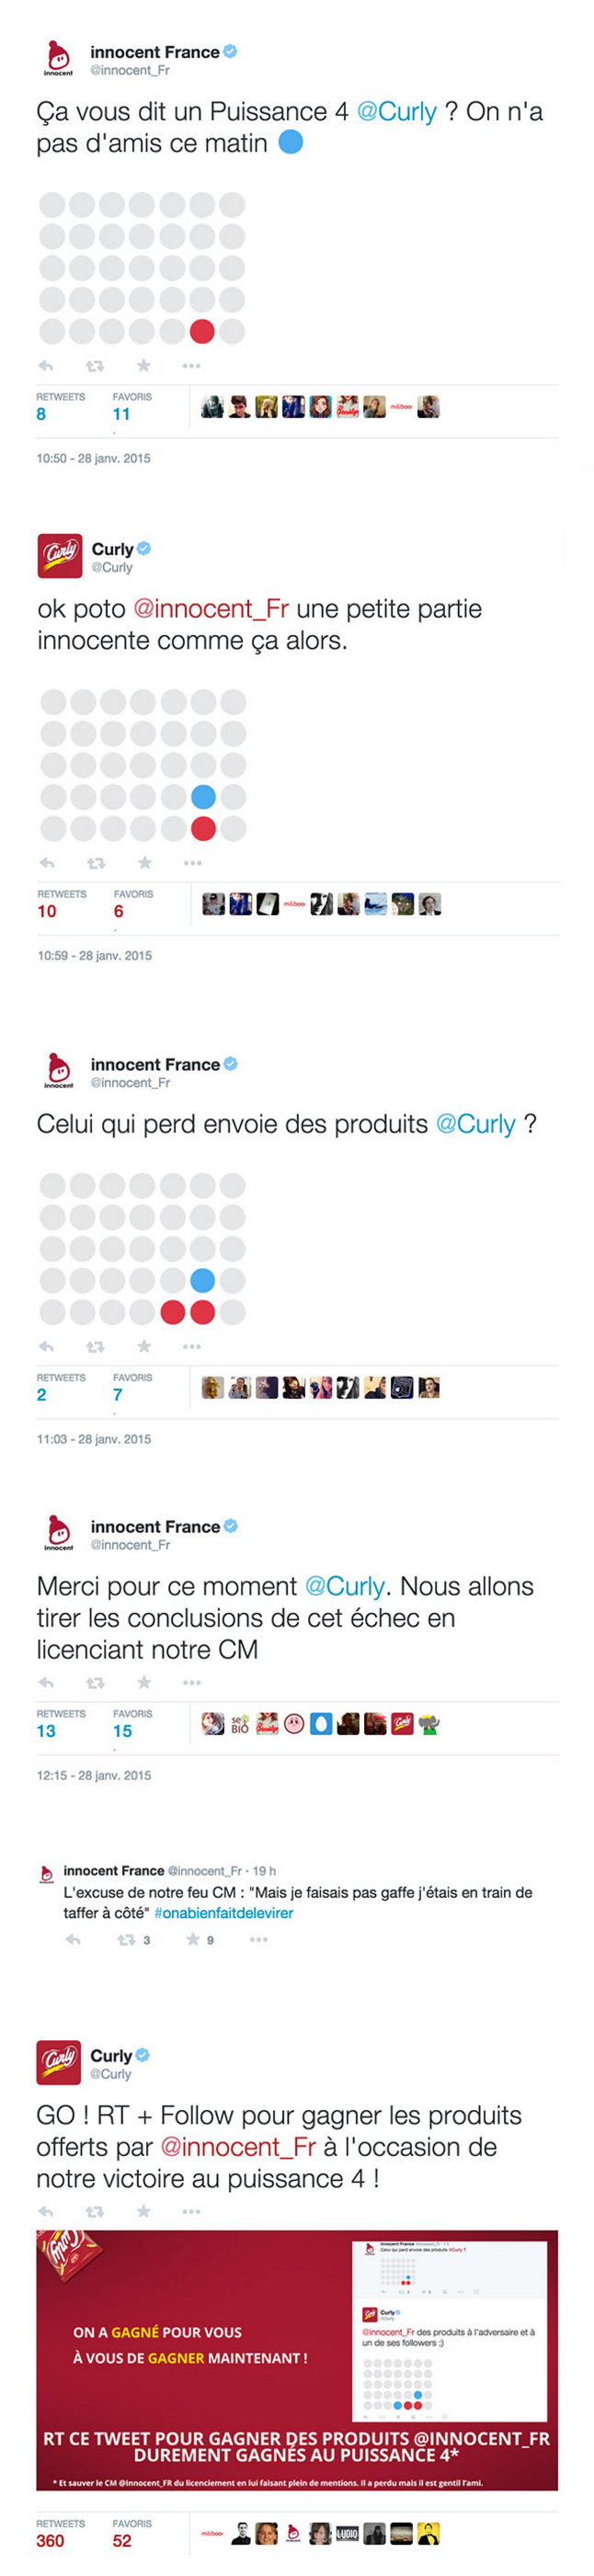 Innocent & Curly : Puissance 4 sur Twitter